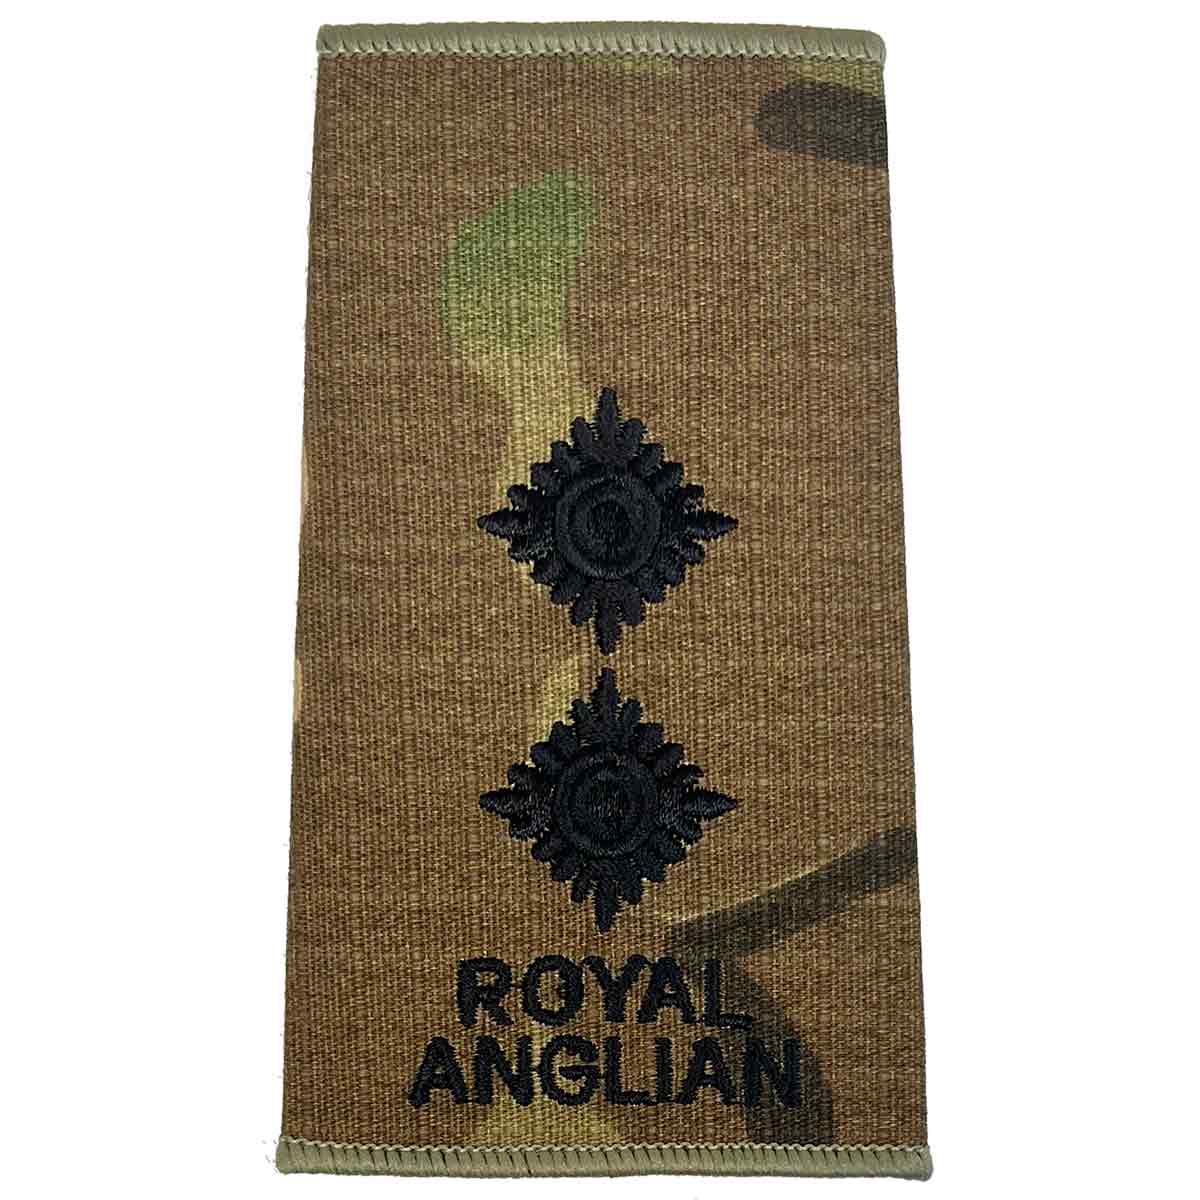 Royal Anglian Multicam Rank Slides (Pair) - John Bull Clothing